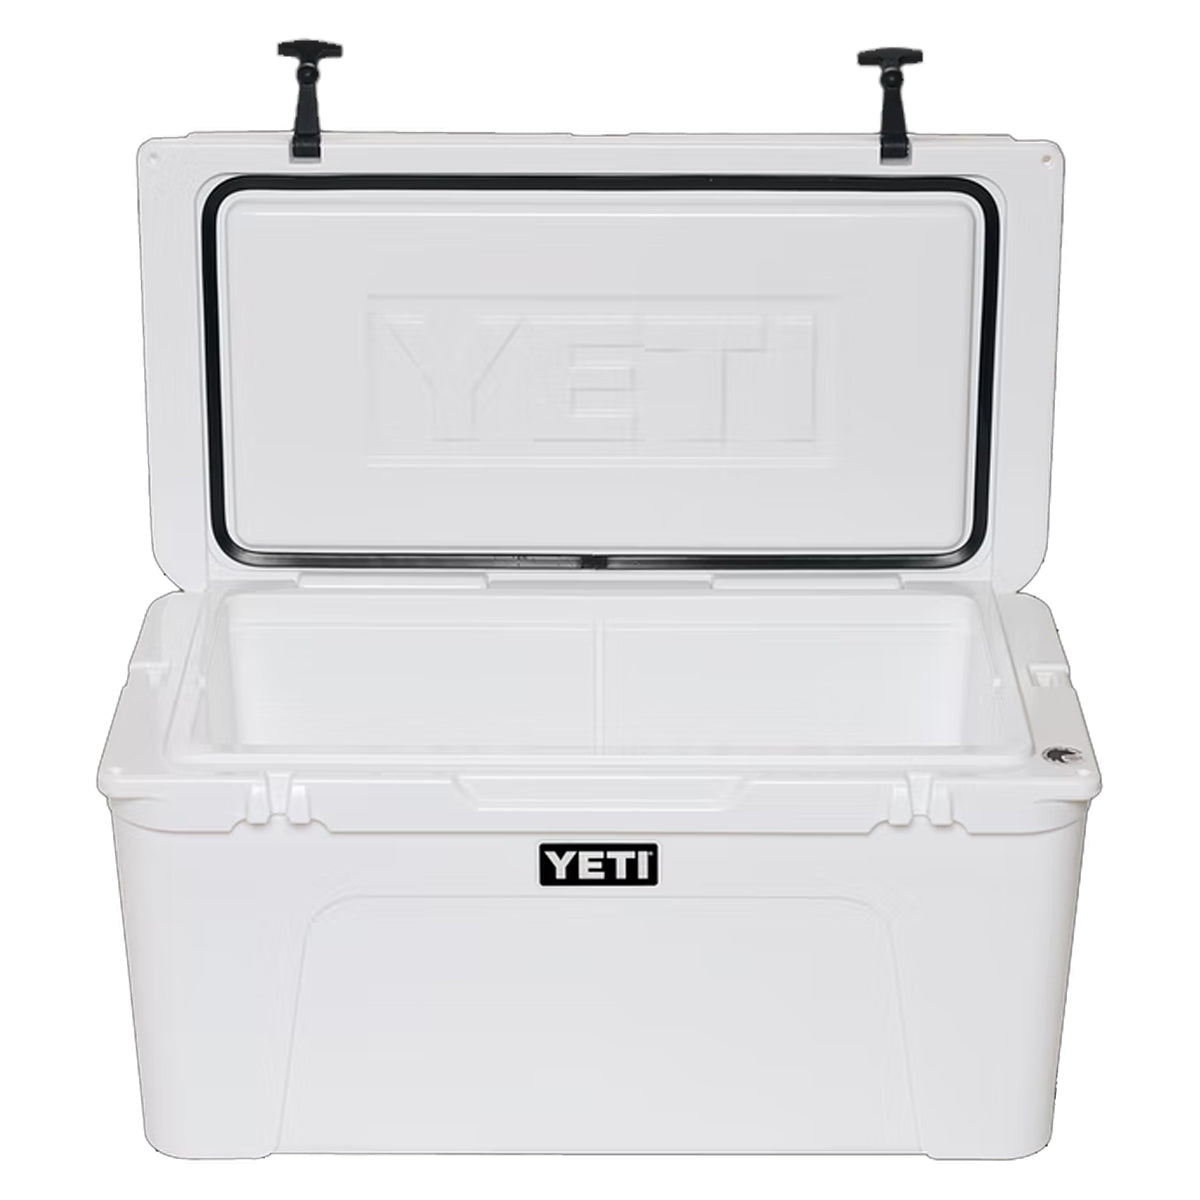 YETI Tundra 75 Cooler in  by GOHUNT | YETI - GOHUNT Shop